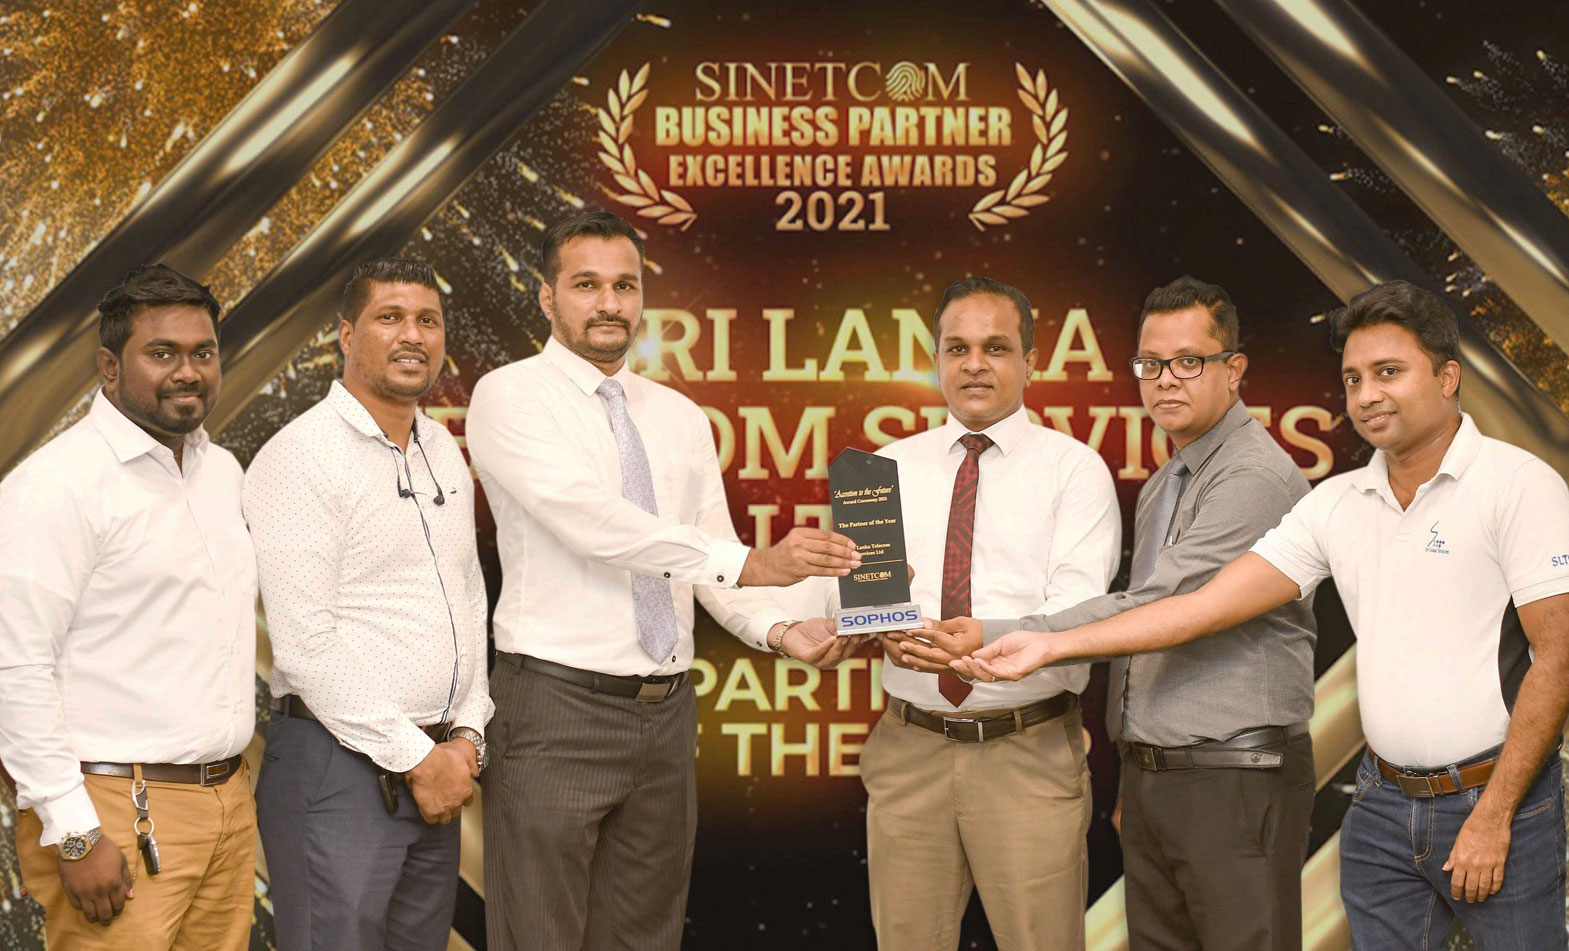 SINETCOM  Business Partner Excellence Awards 2021